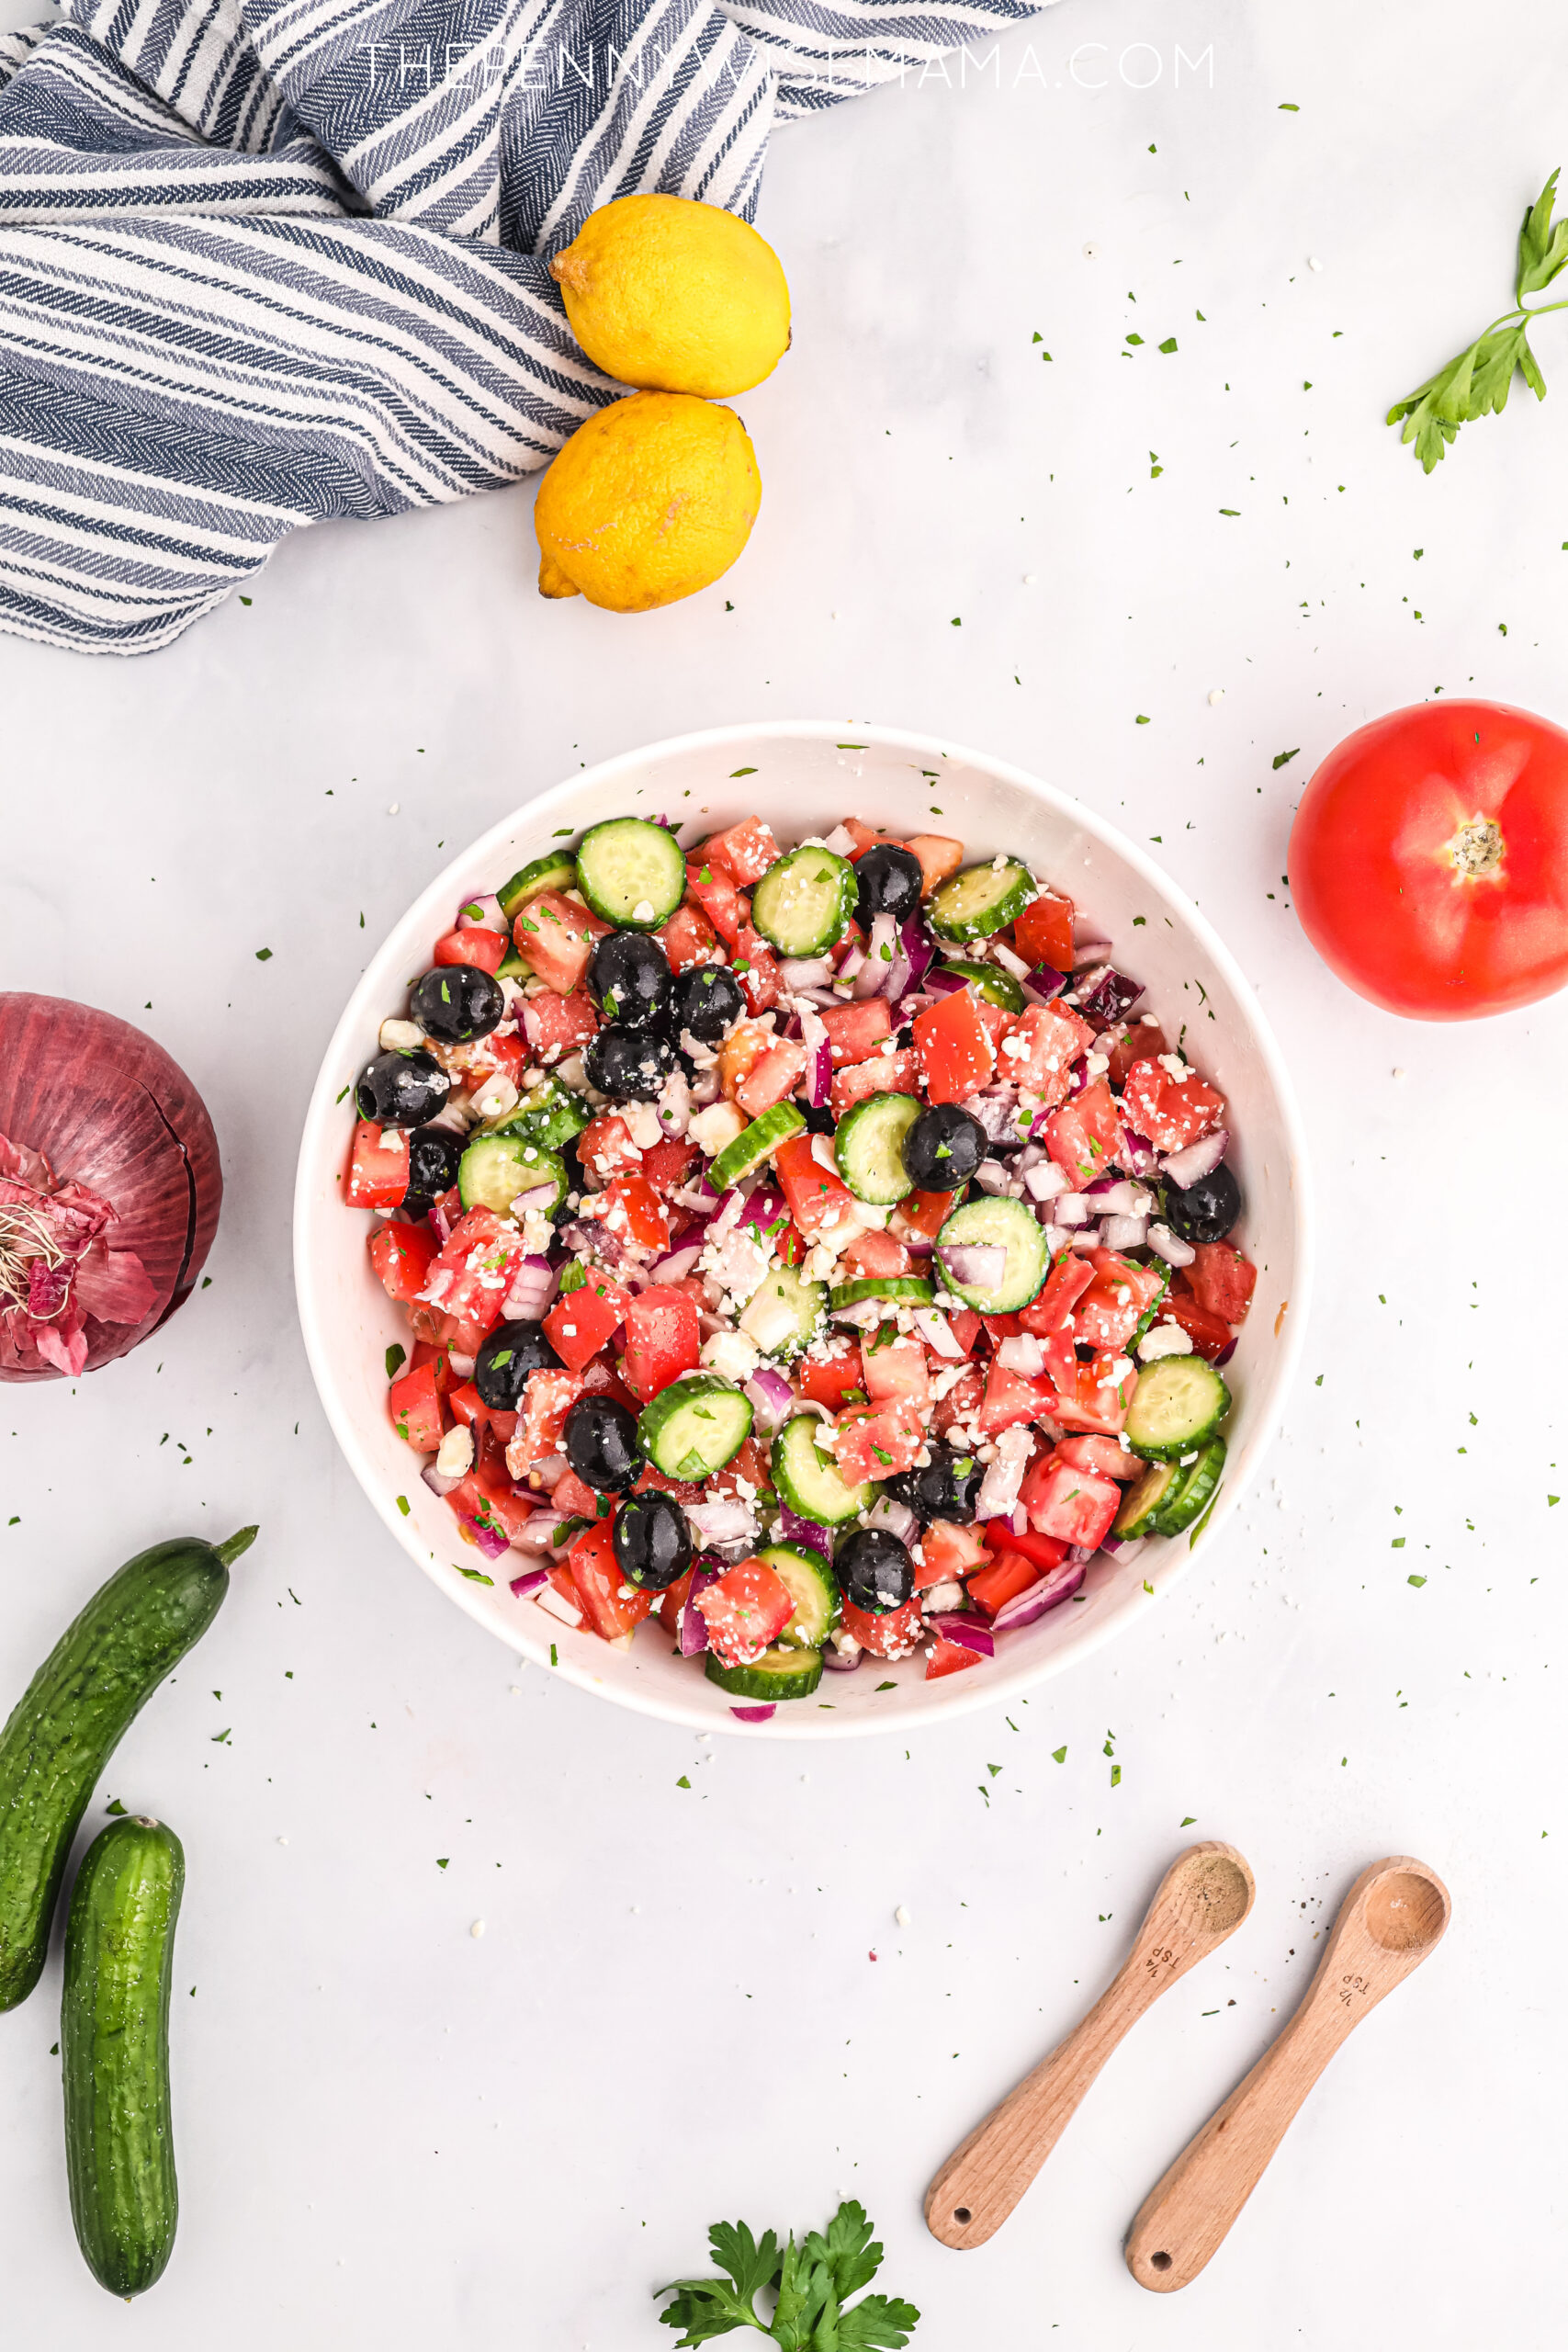 How to Make Mediterranean-Style Cucumber Salad recipe